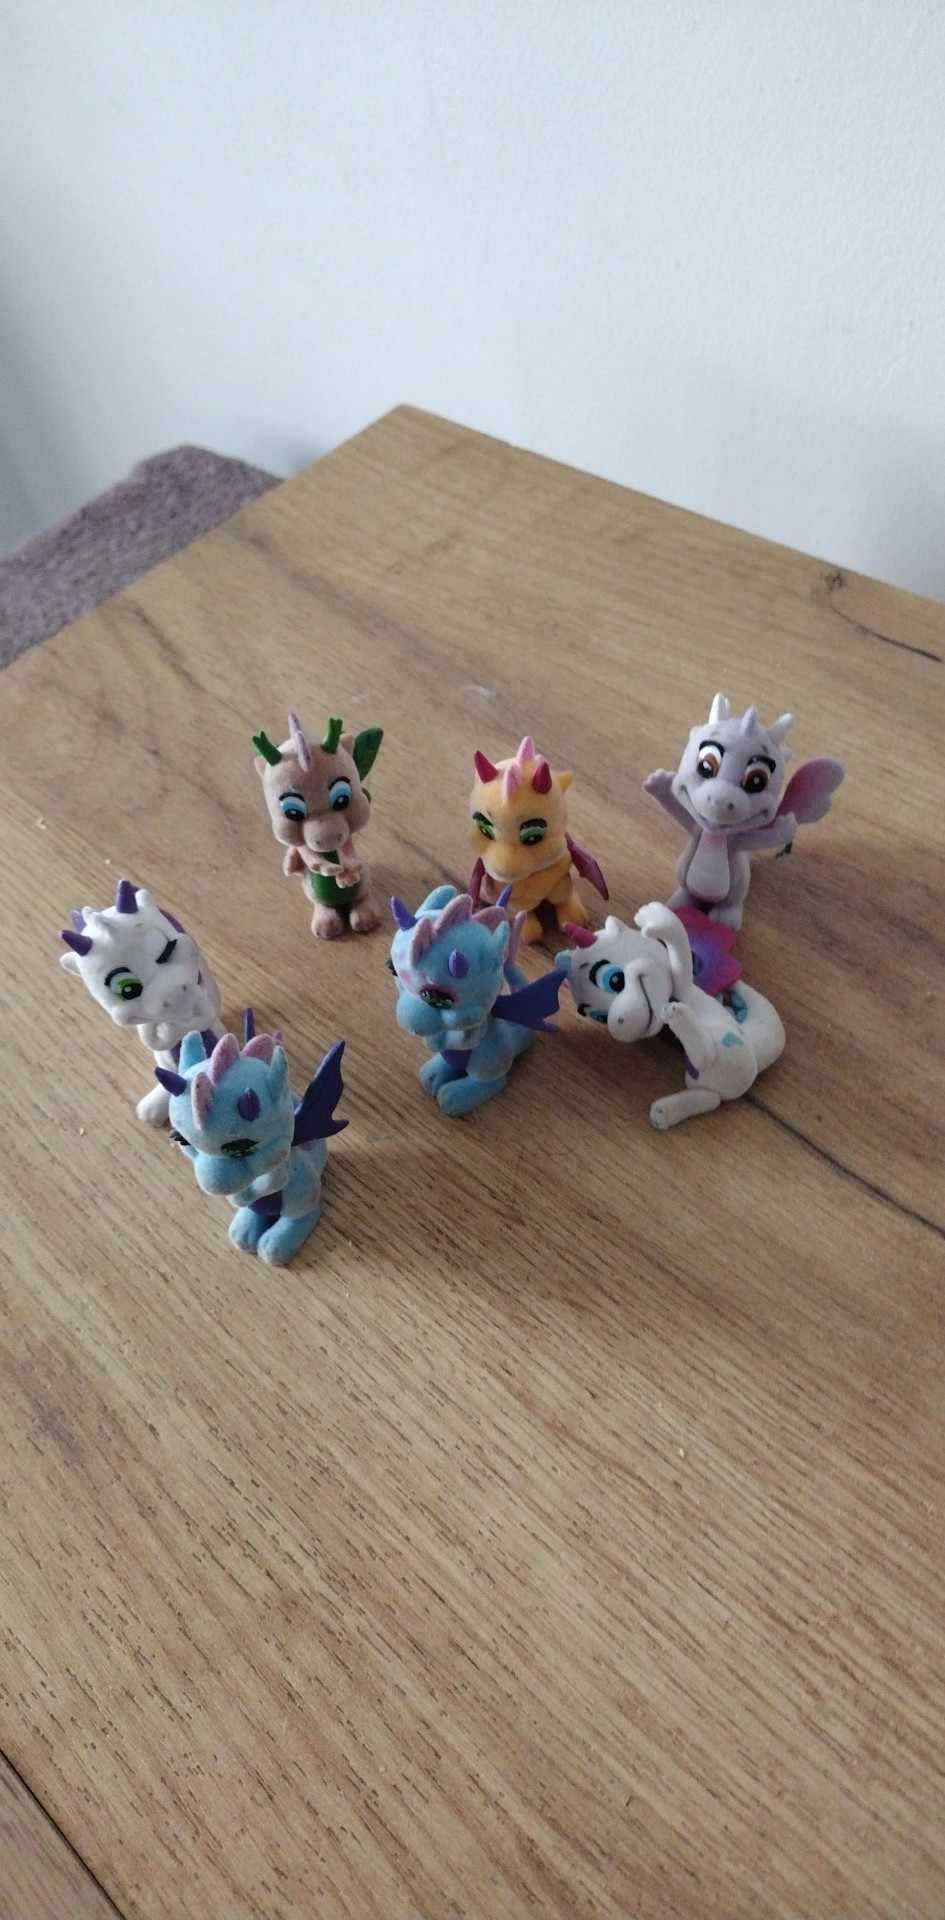 Stare zabawki Hasbro koniki kucyki Ponny i figurki smoki